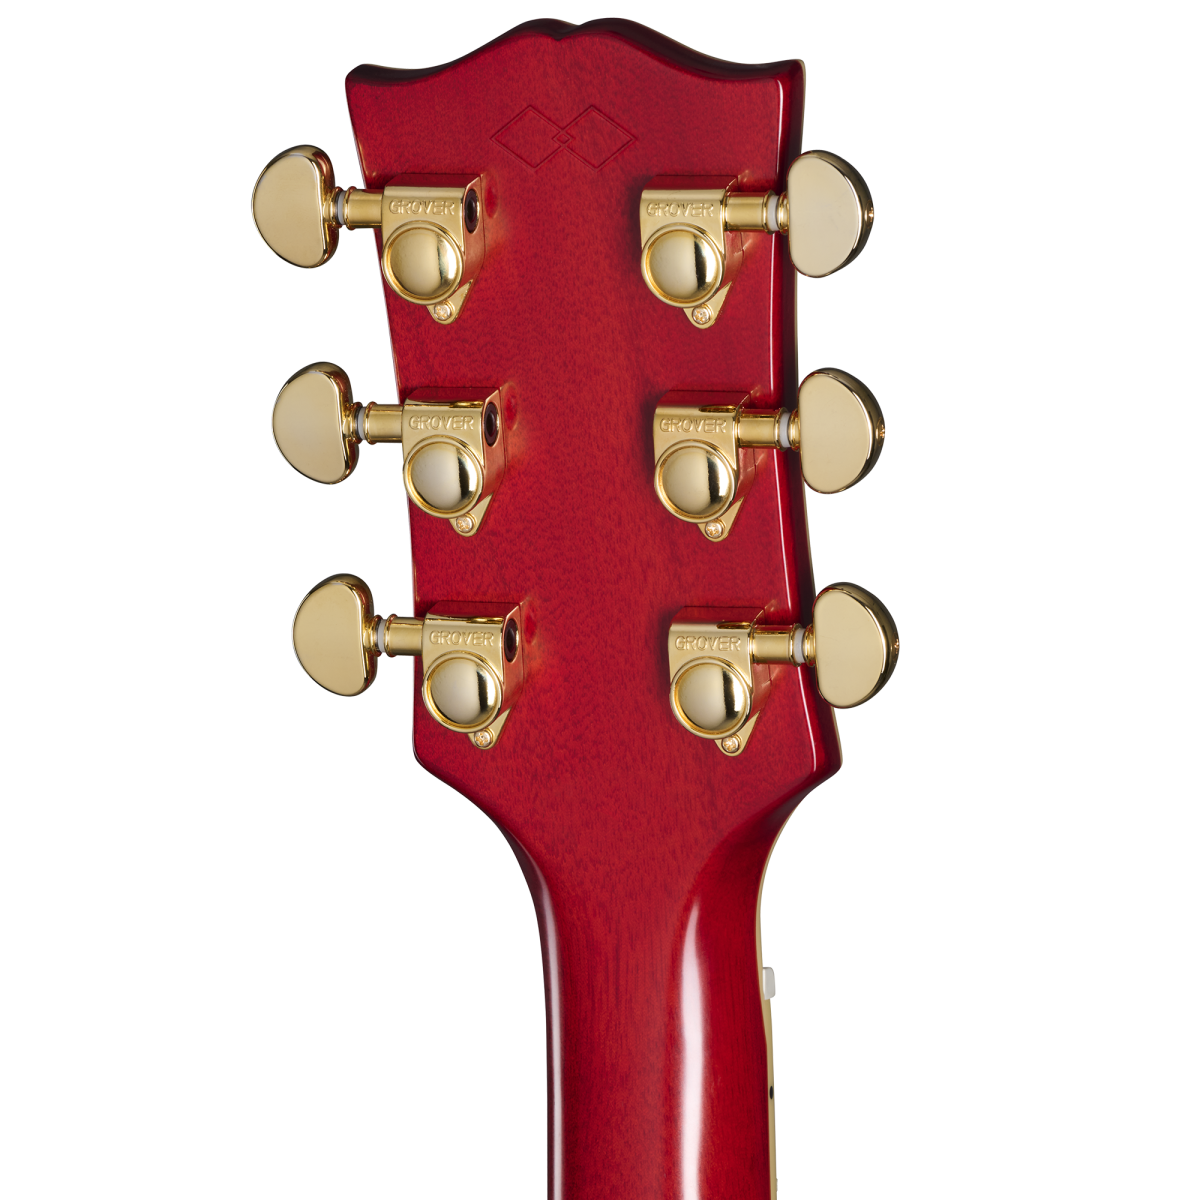 1959 ES-355, Cherry Red | Epiphone